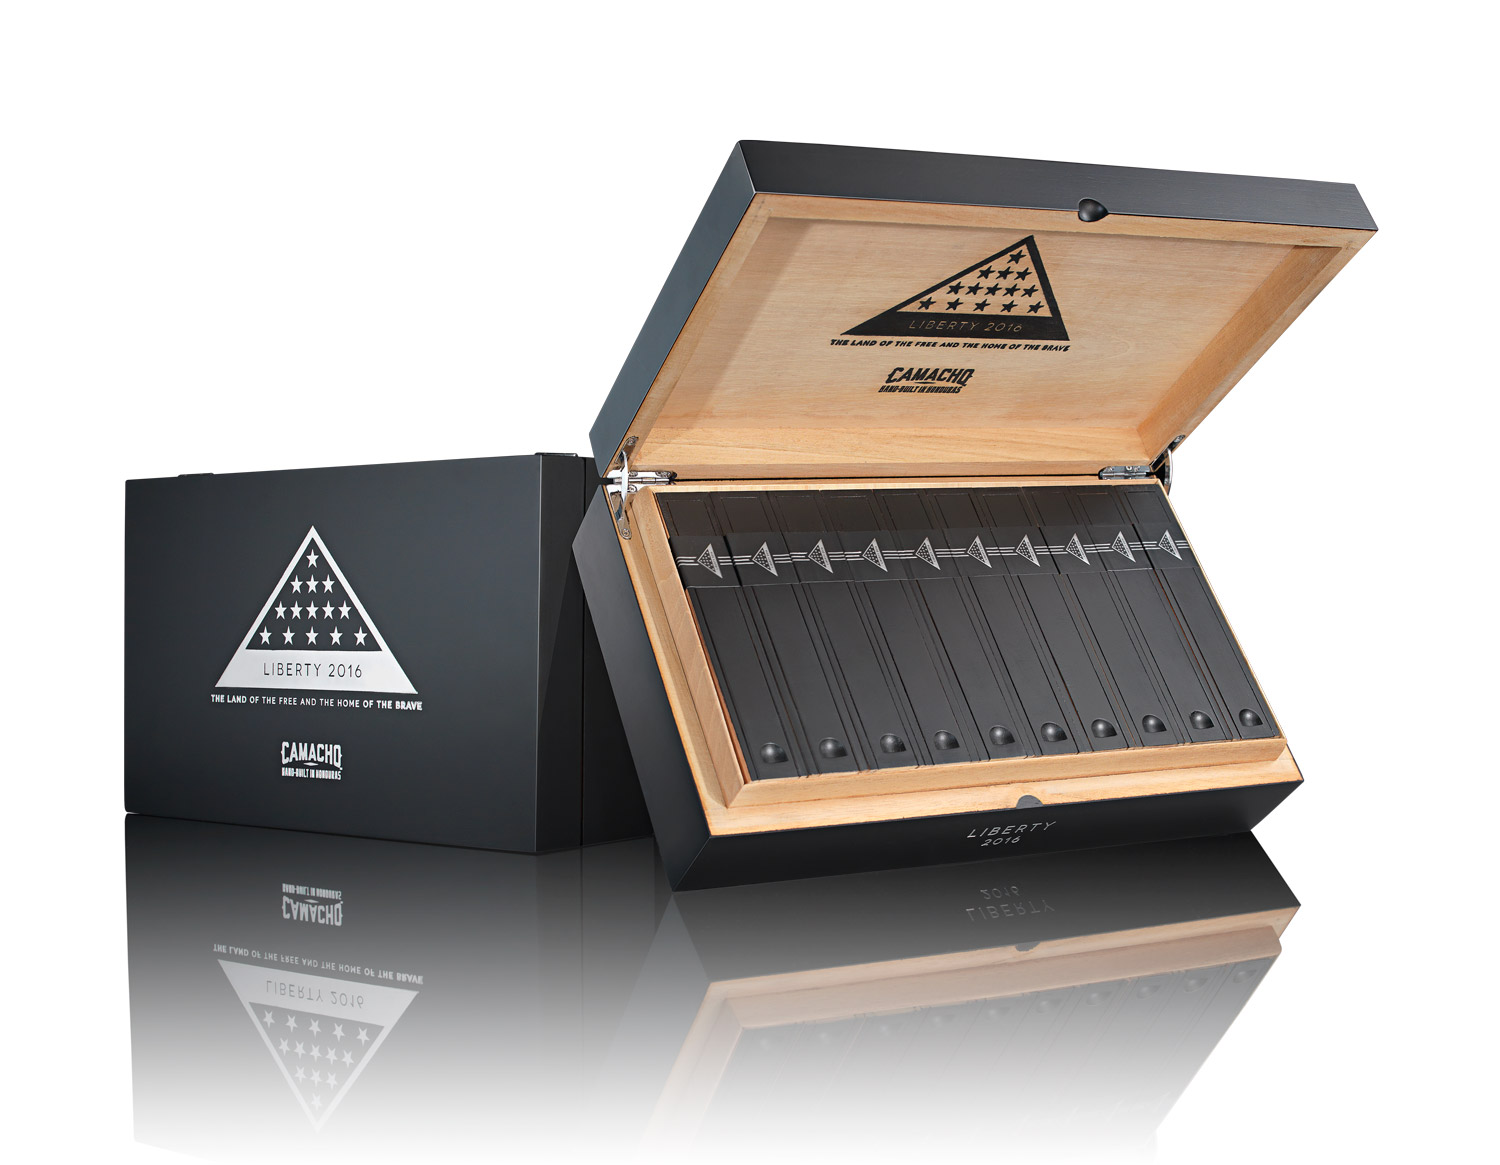 Camacho Liberty Series 2016 cigar packaging